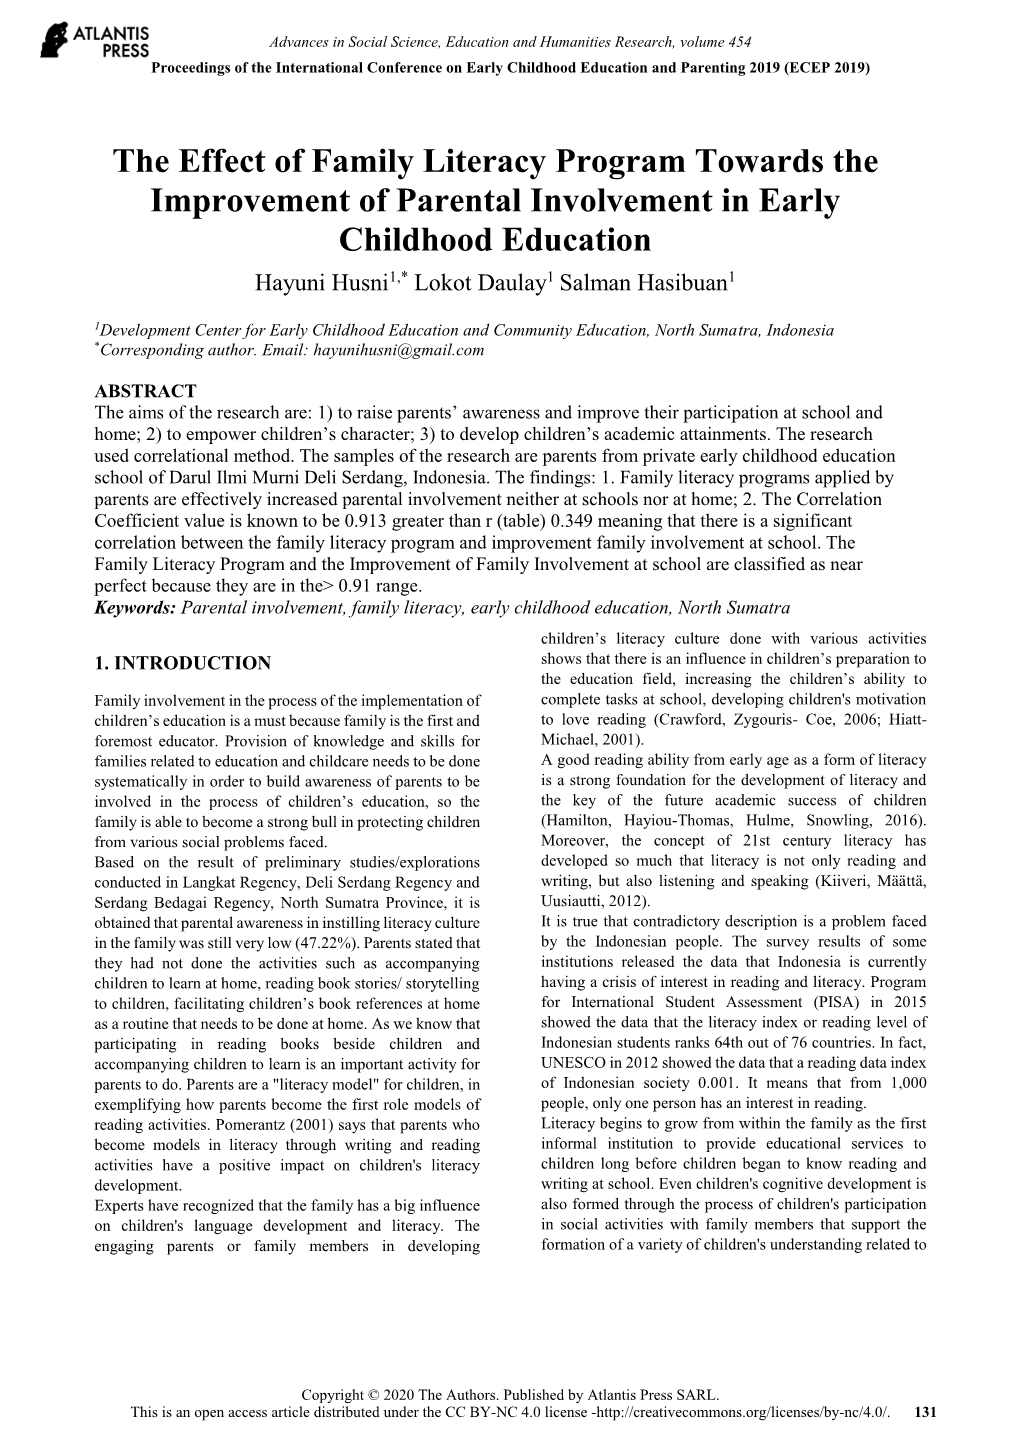 The Effect of Family Literacy Program Towards the Improvement of Parental Involvement in Early Childhood Education Hayuni Husni1,* Lokot Daulay1 Salman Hasibuan1